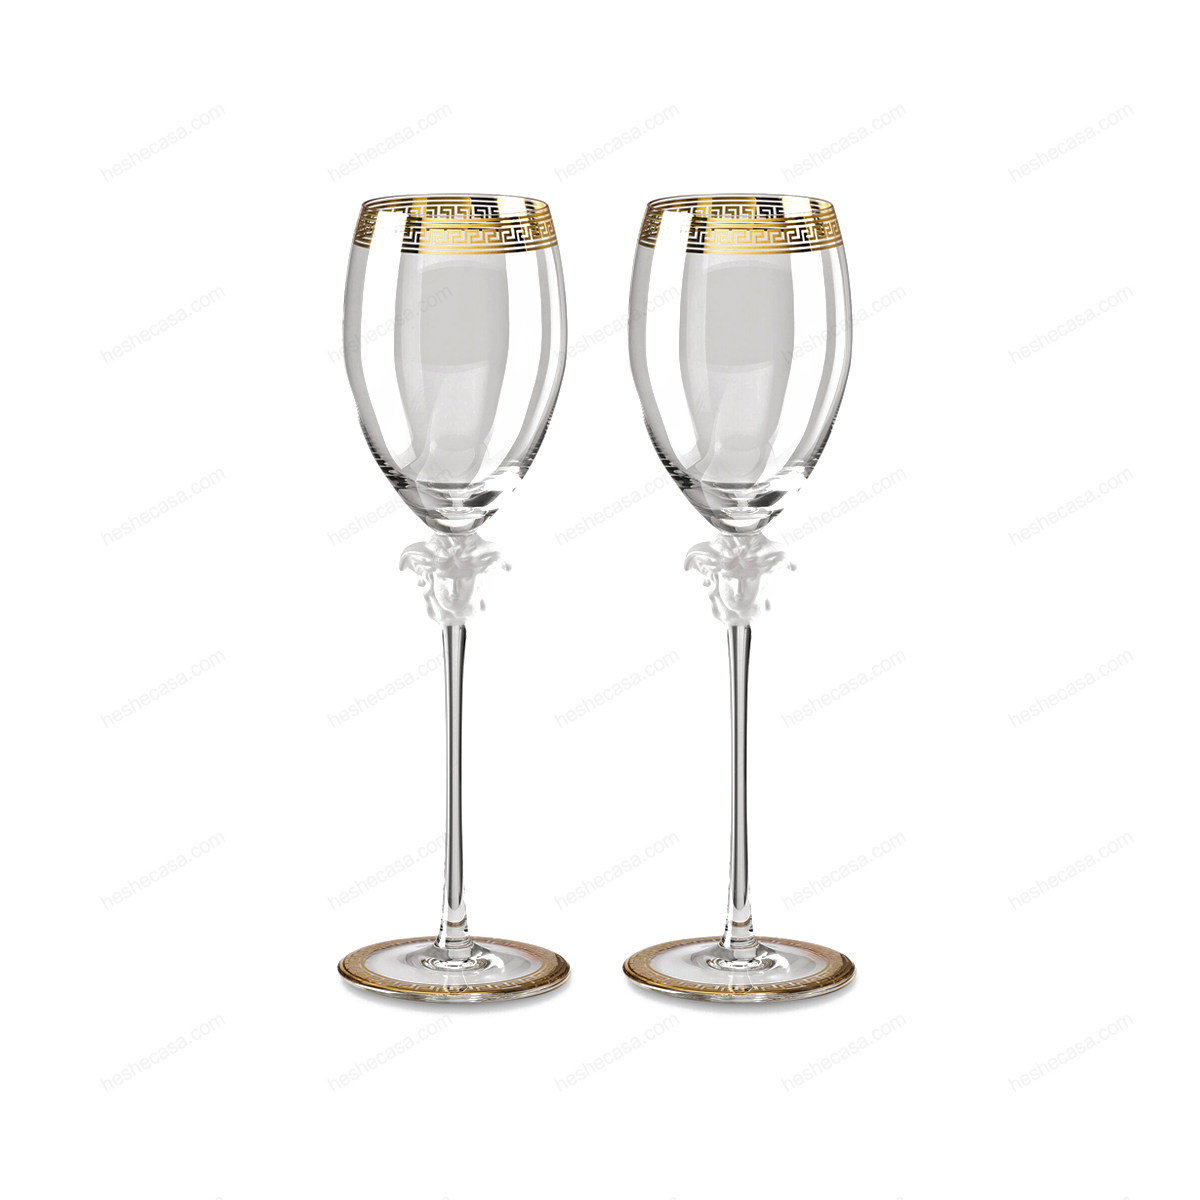 White wine glass set 酒杯